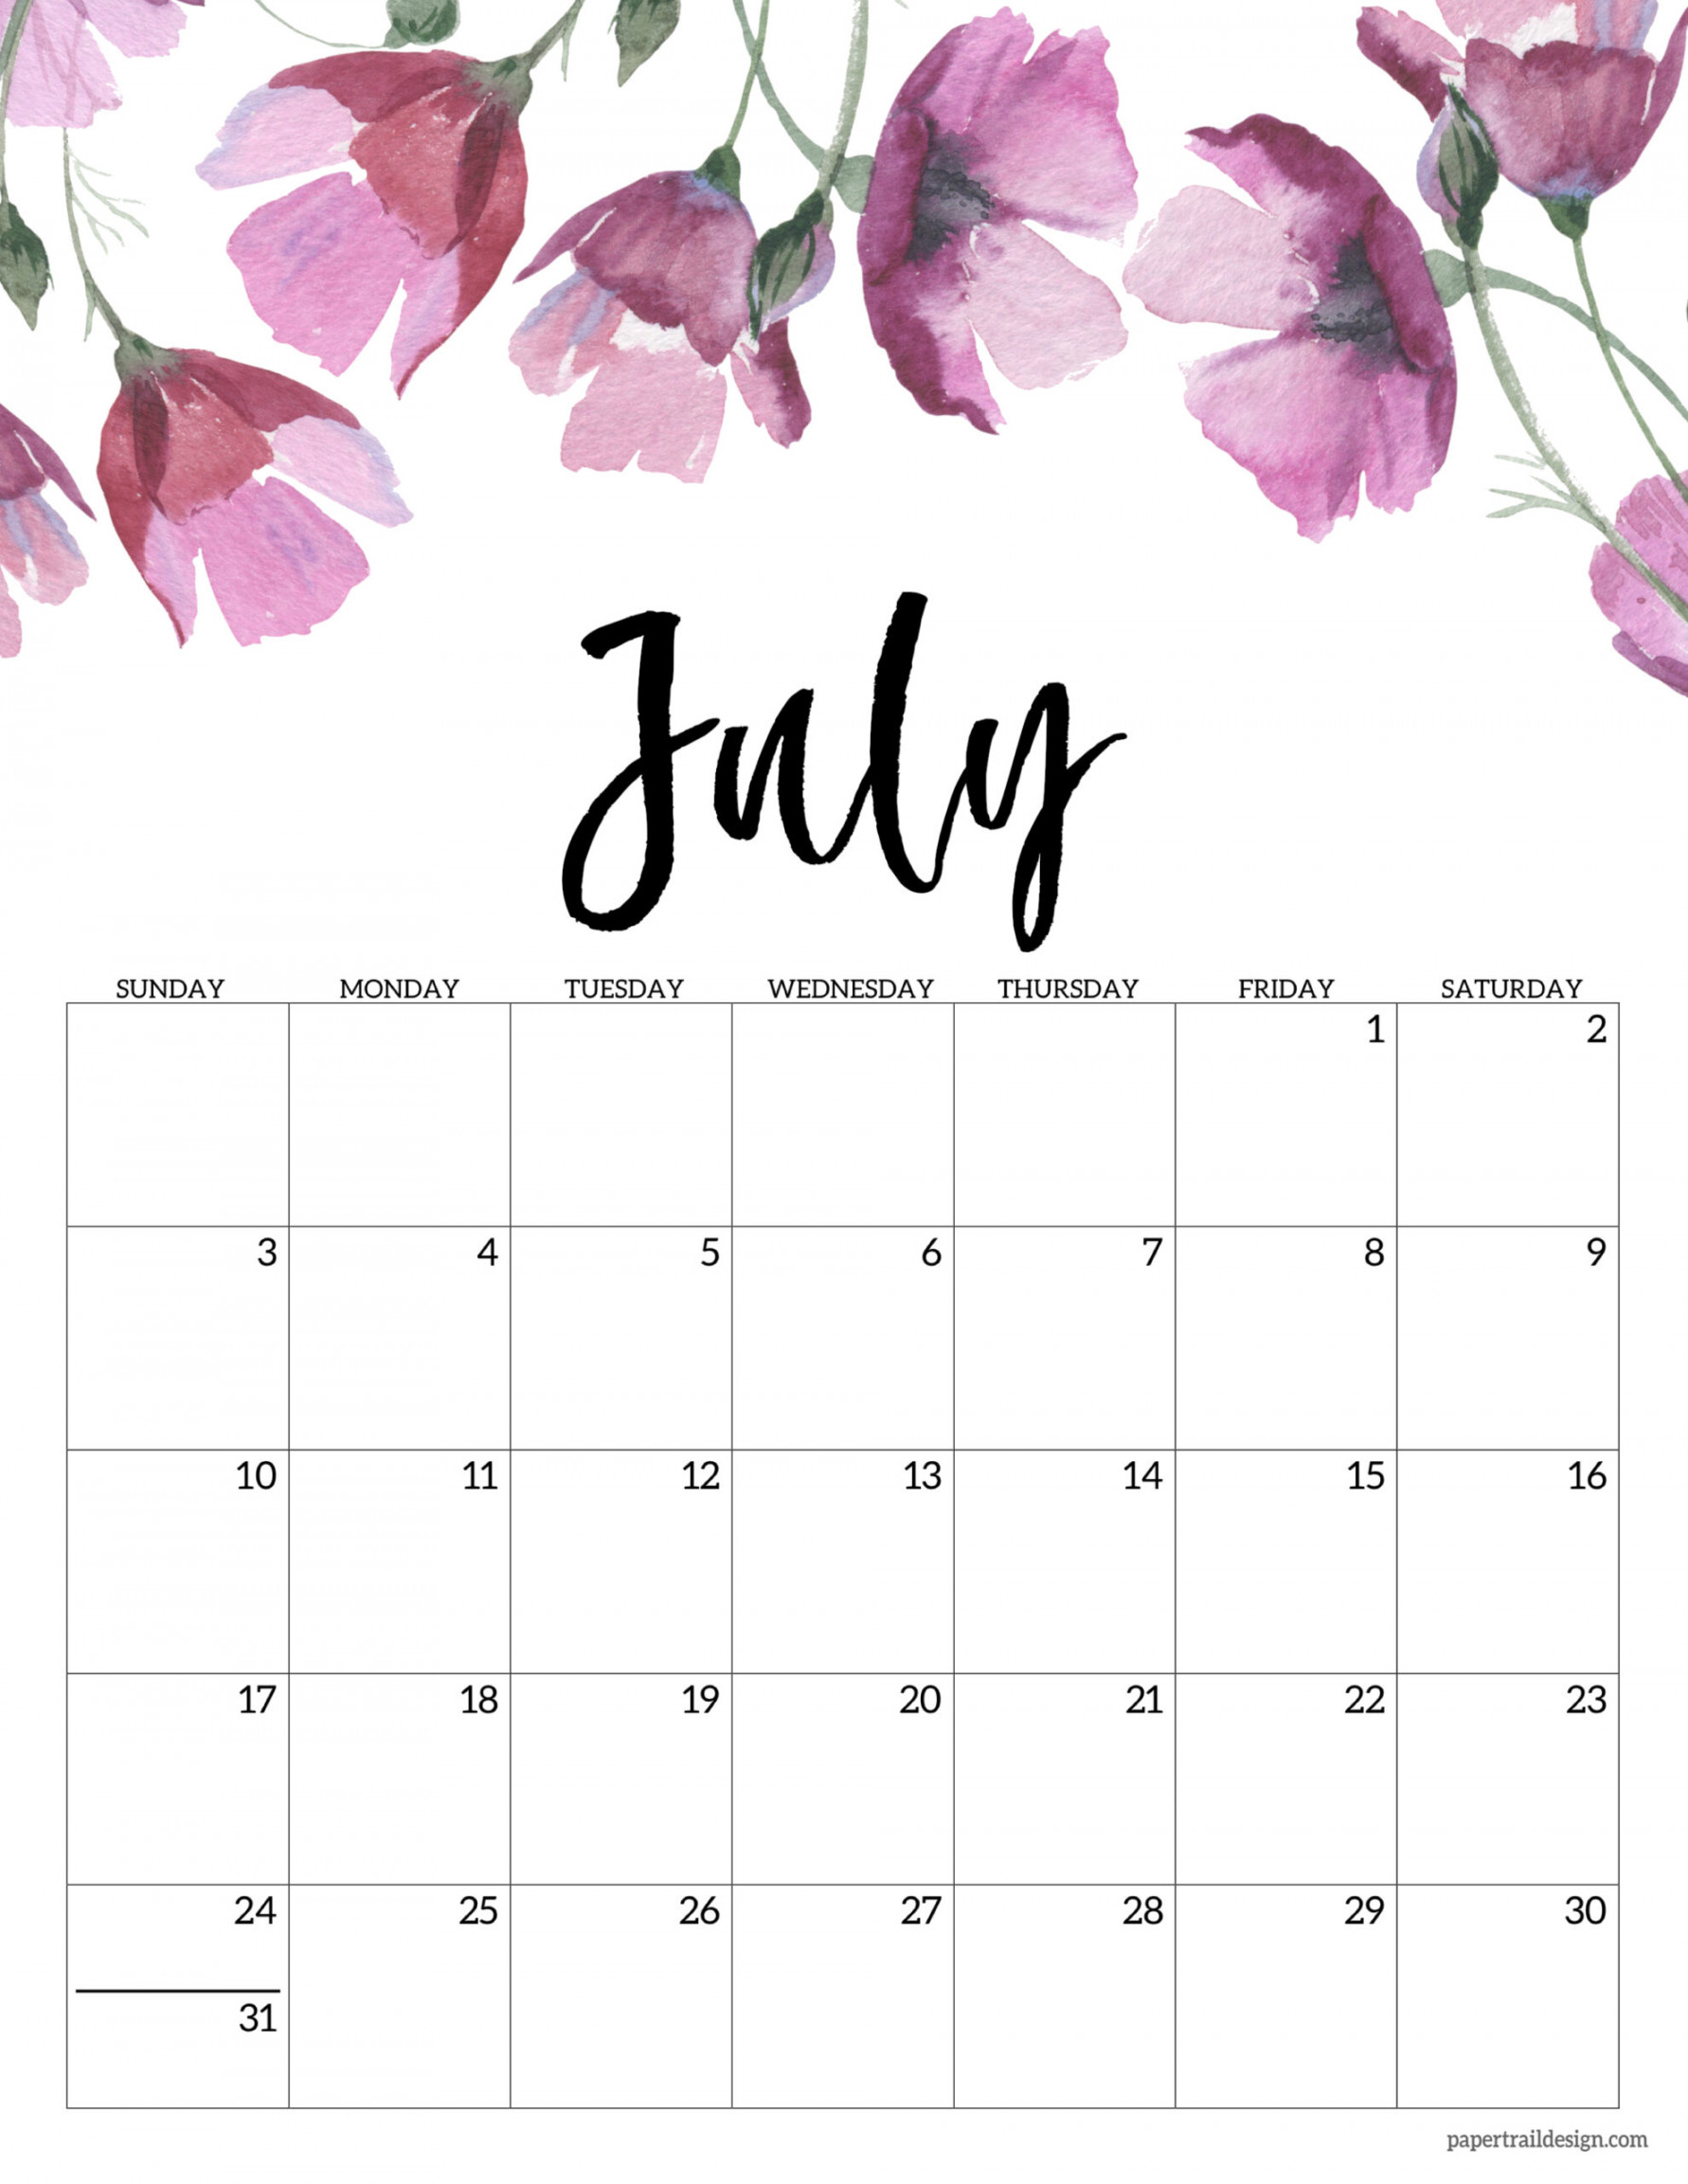 Free Printable Calendar  - Floral - Paper Trail Design